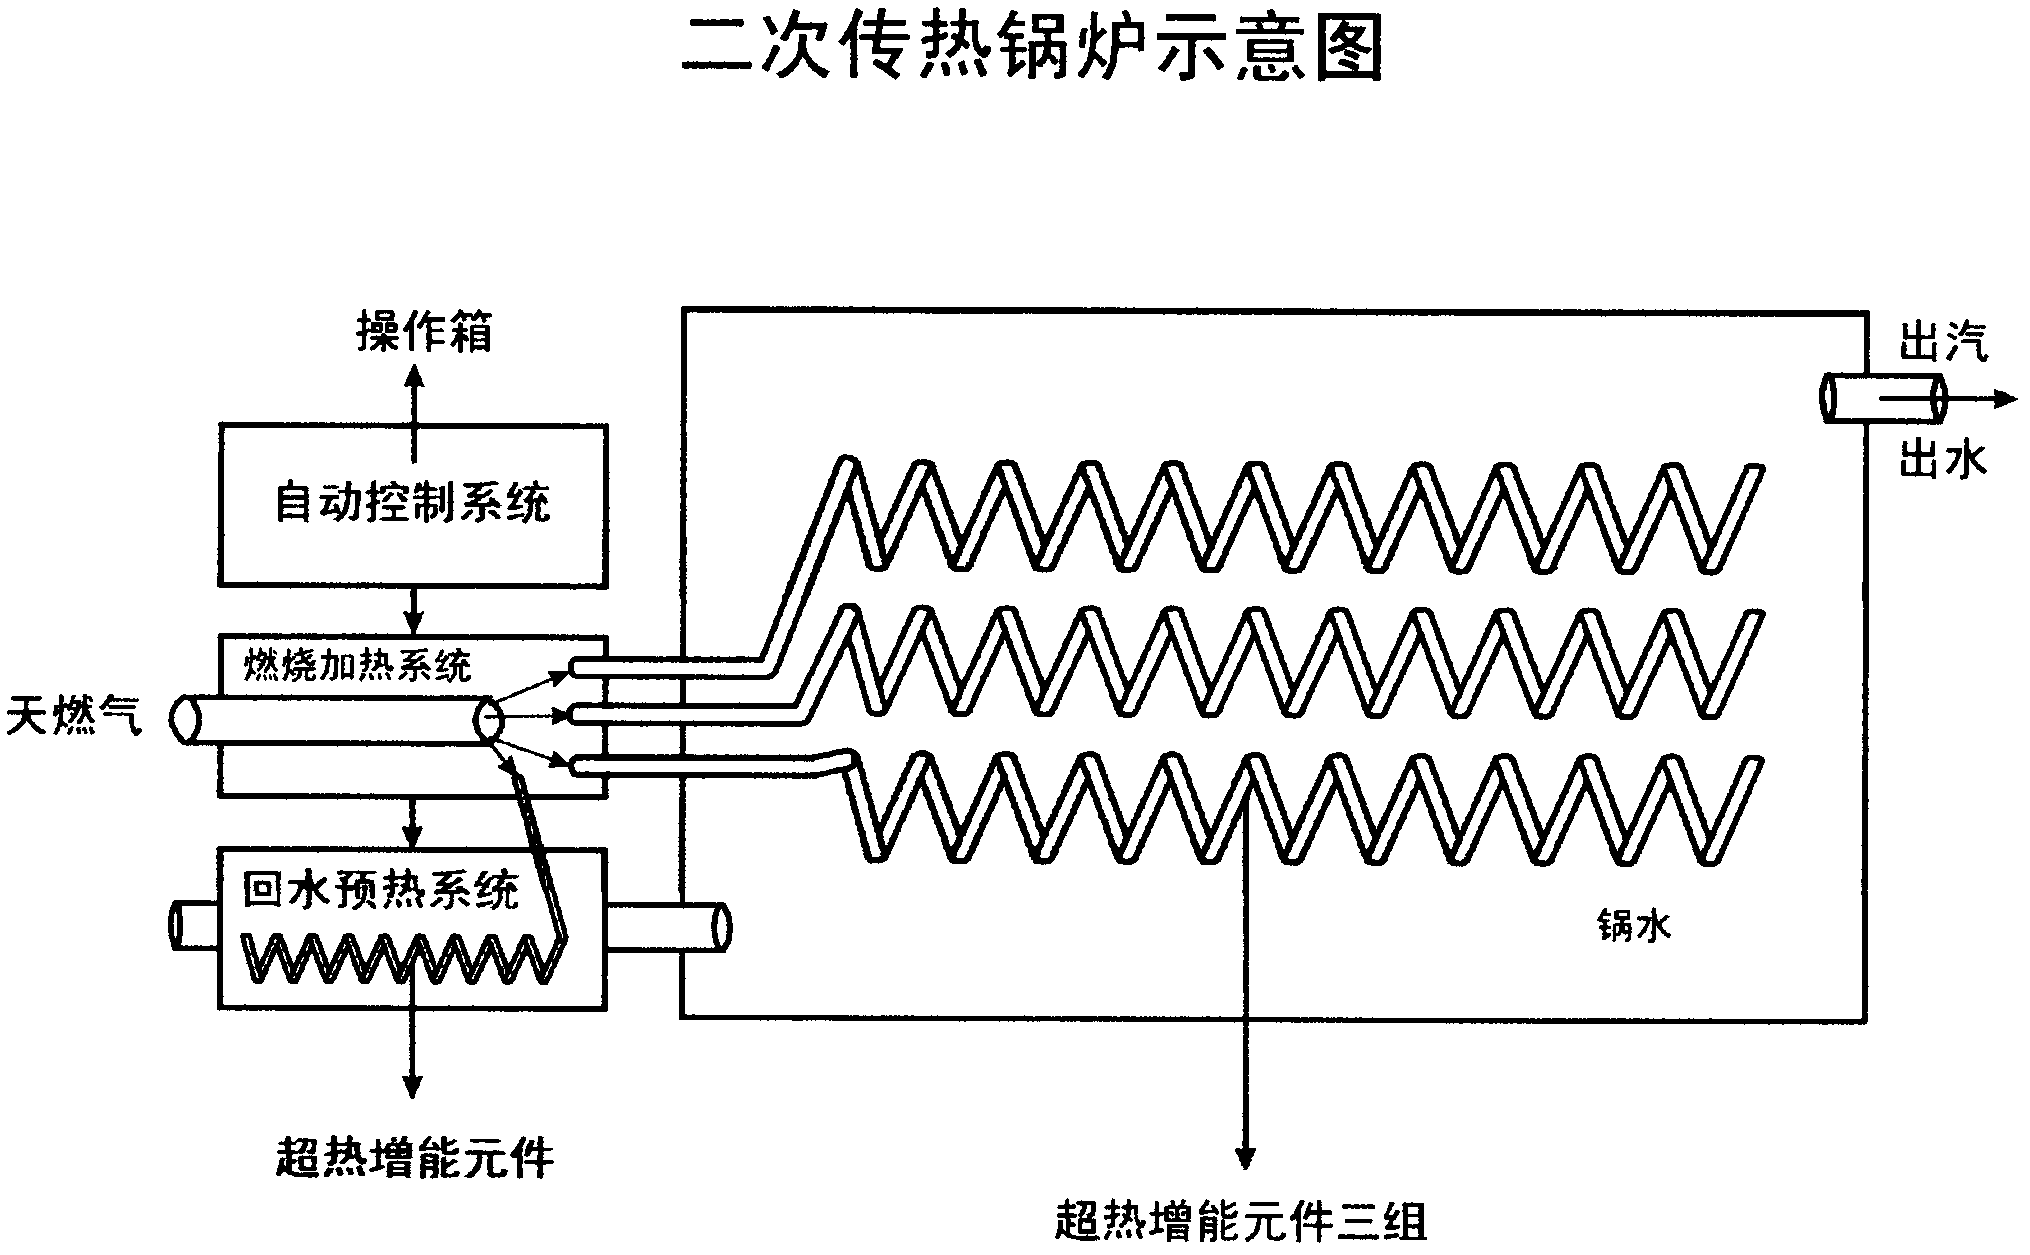 Secondary heat transmission boiler